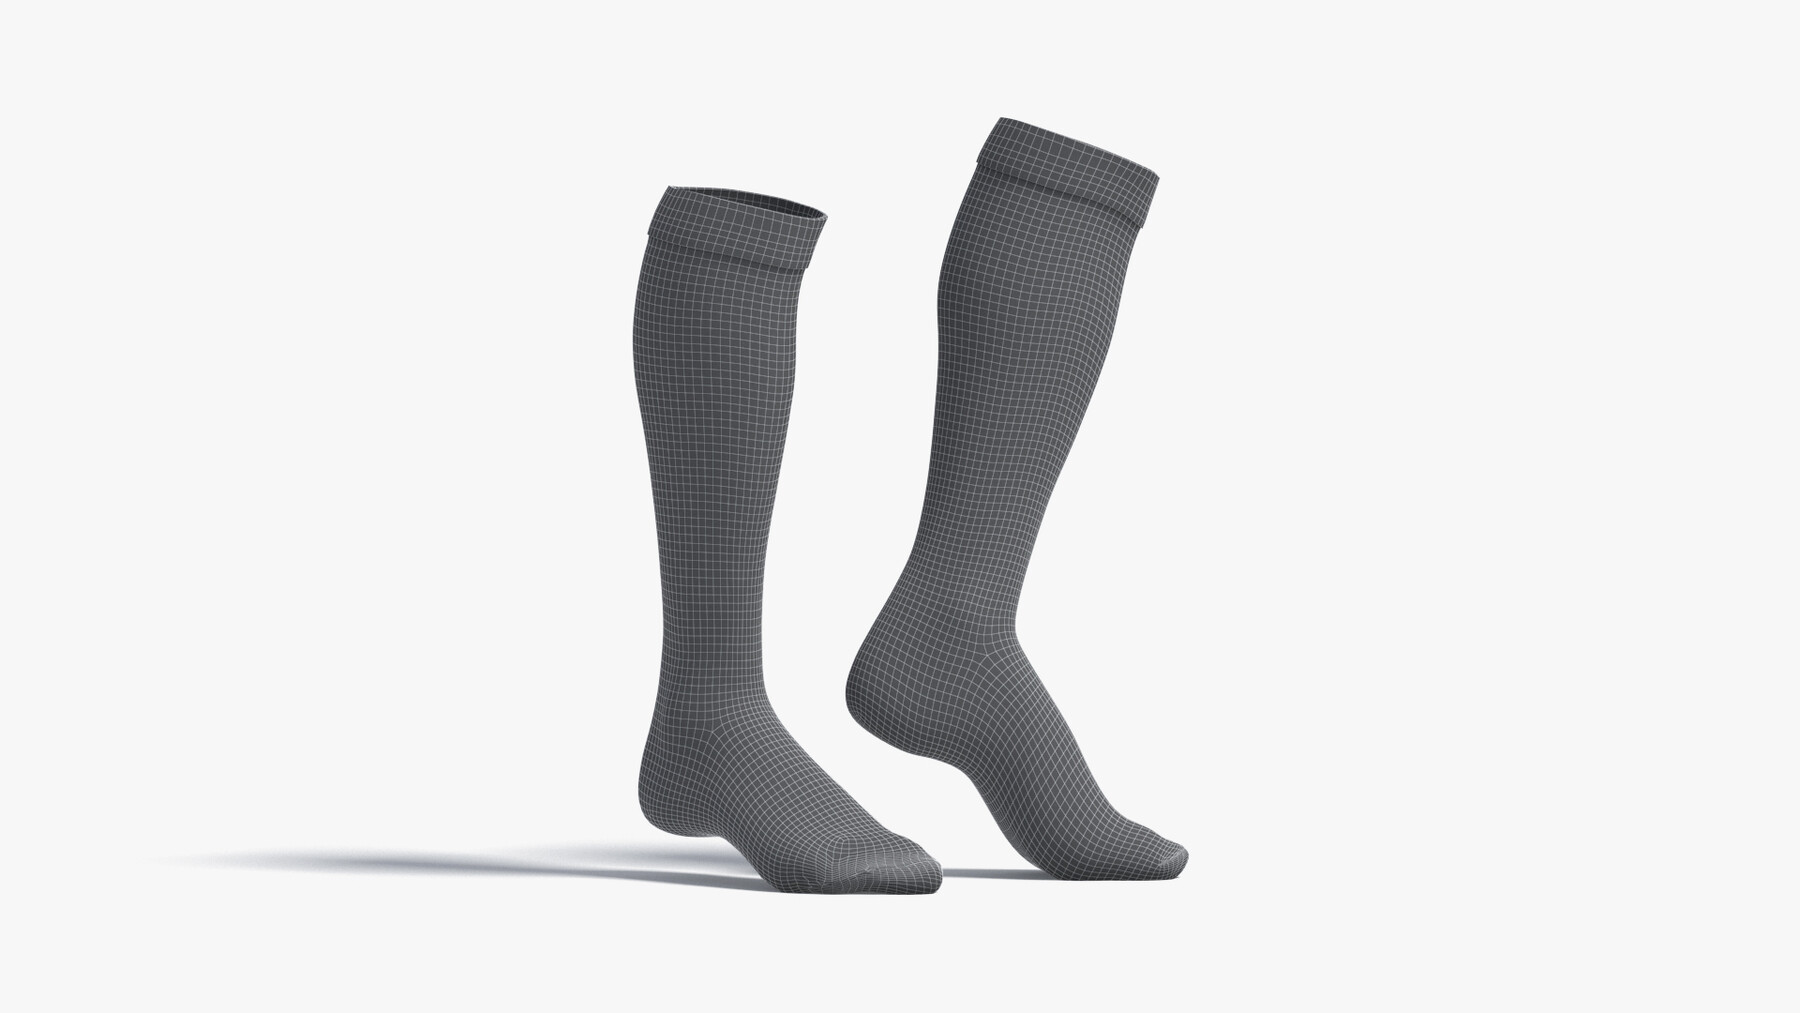 ArtStation - White Knee High Socks stand on tiptoe - fabric sox pair ...